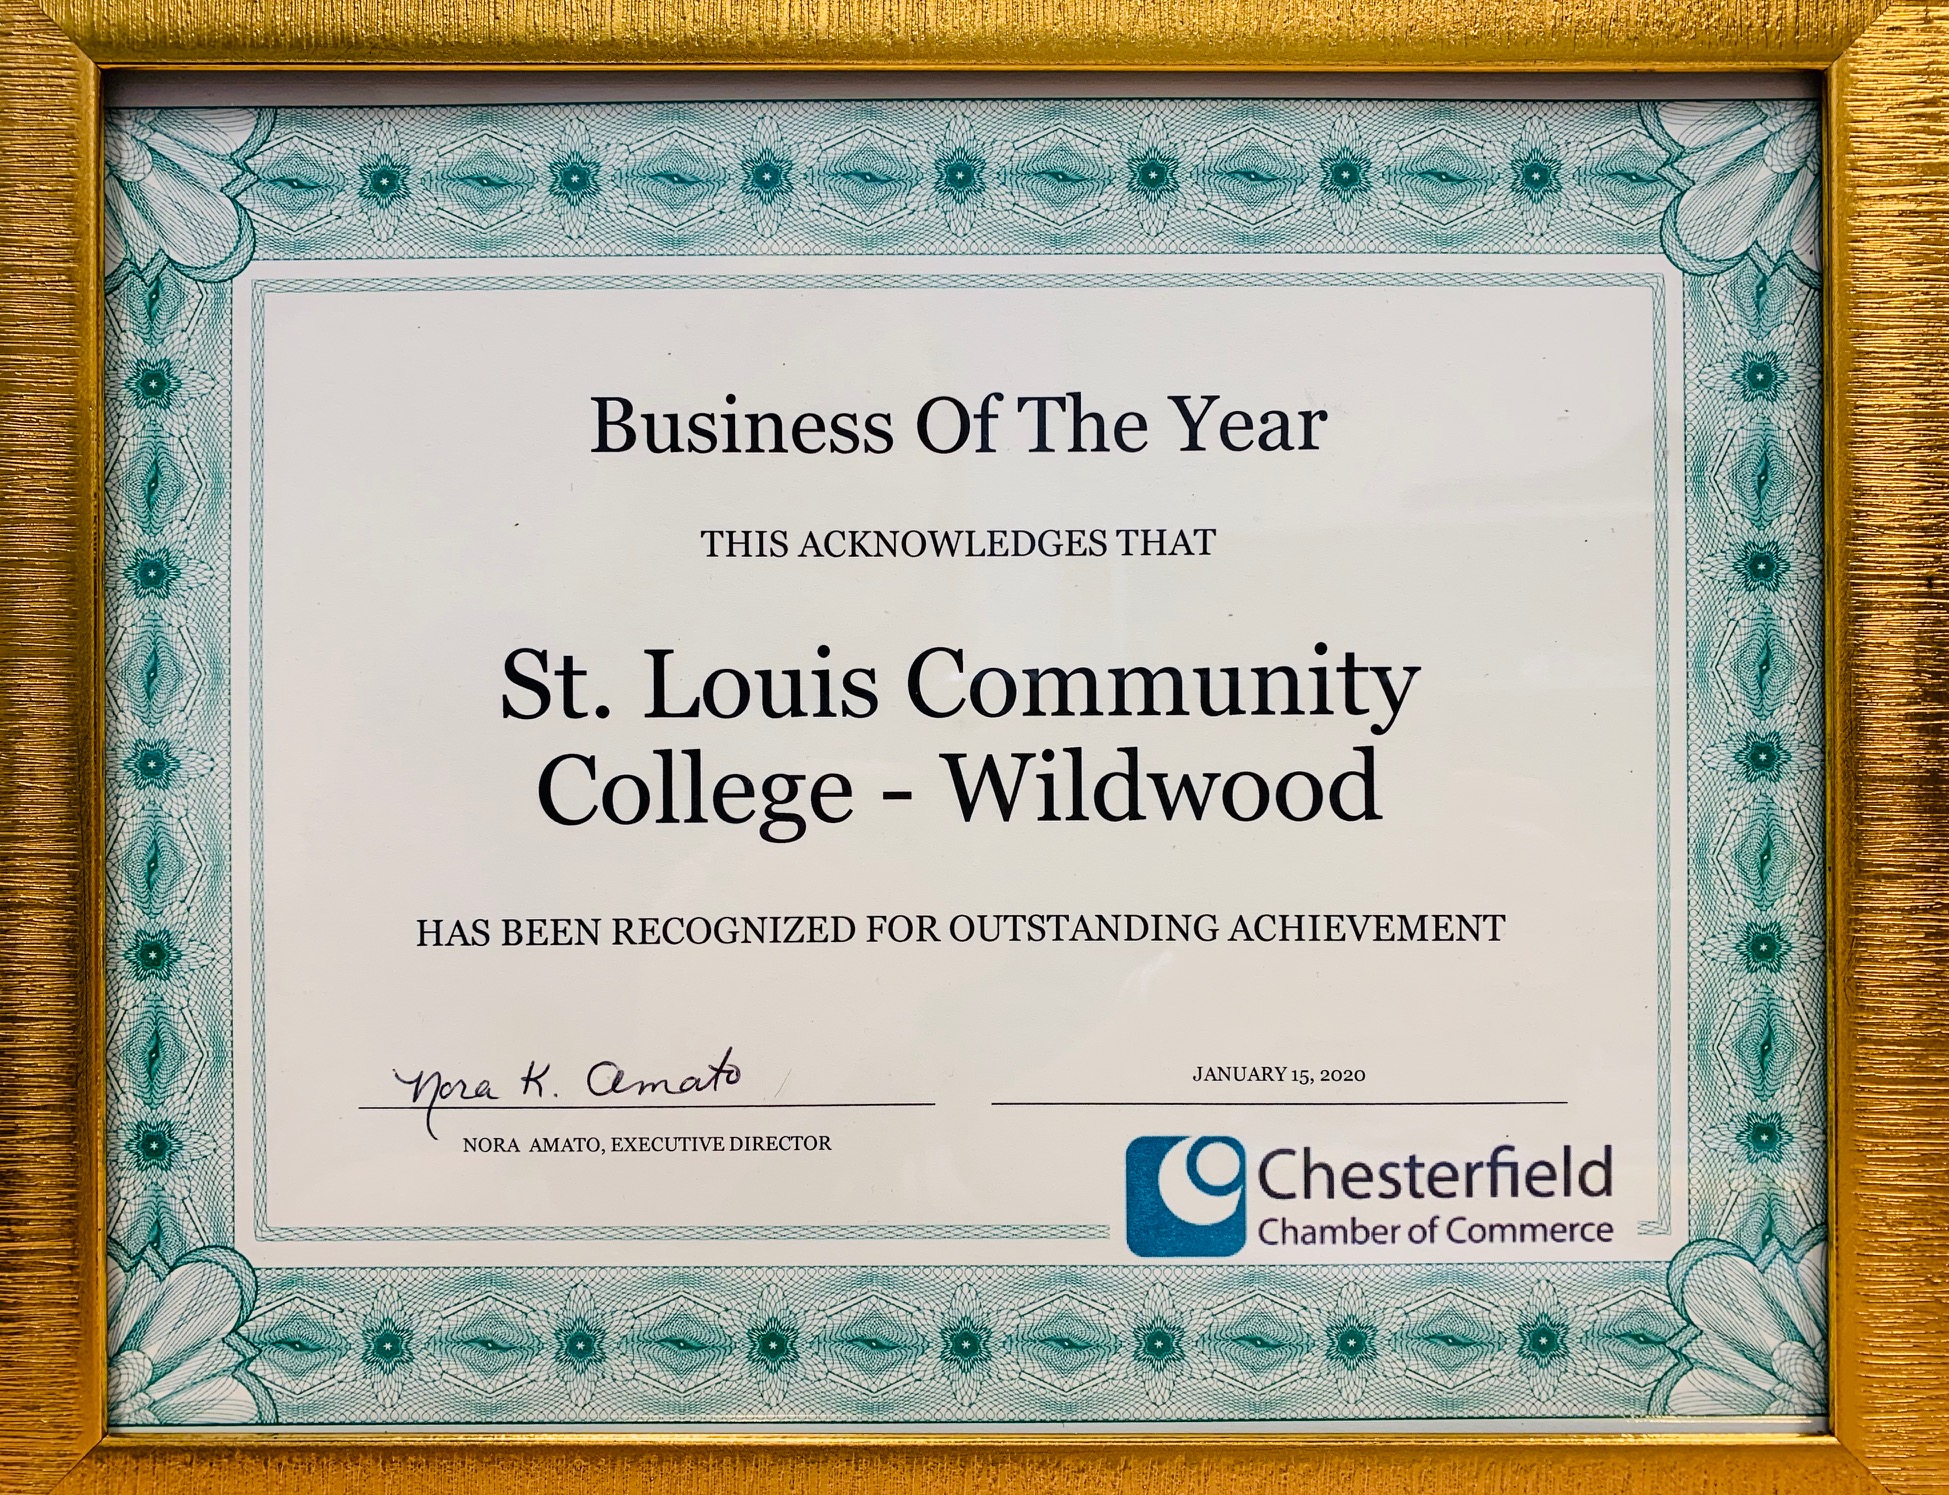 Chesterfield Chamber award certificate